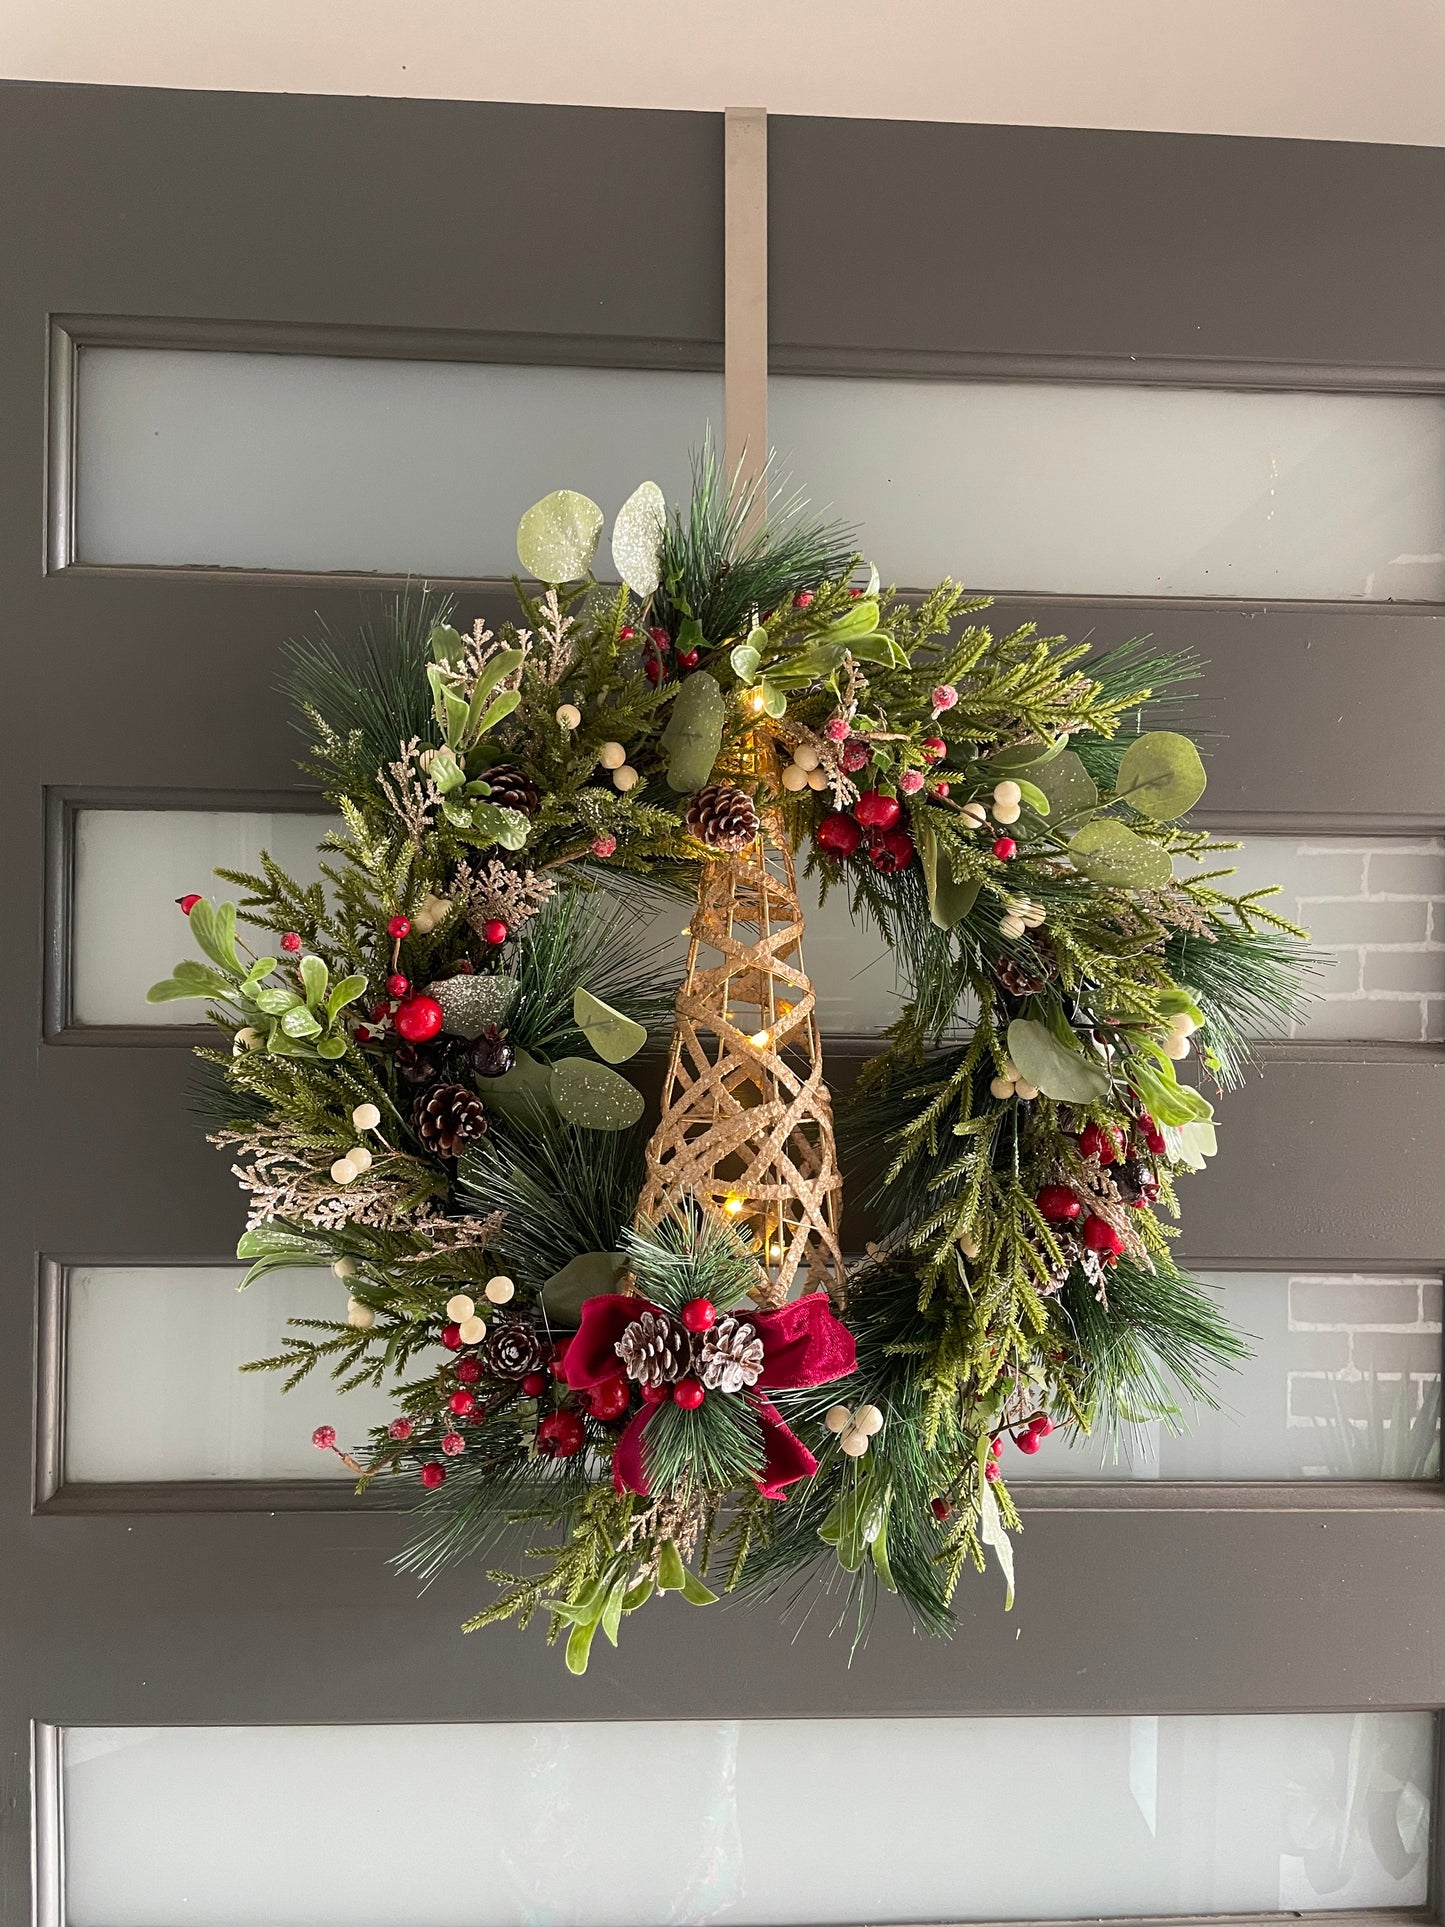 LED Christmas wreath with tree